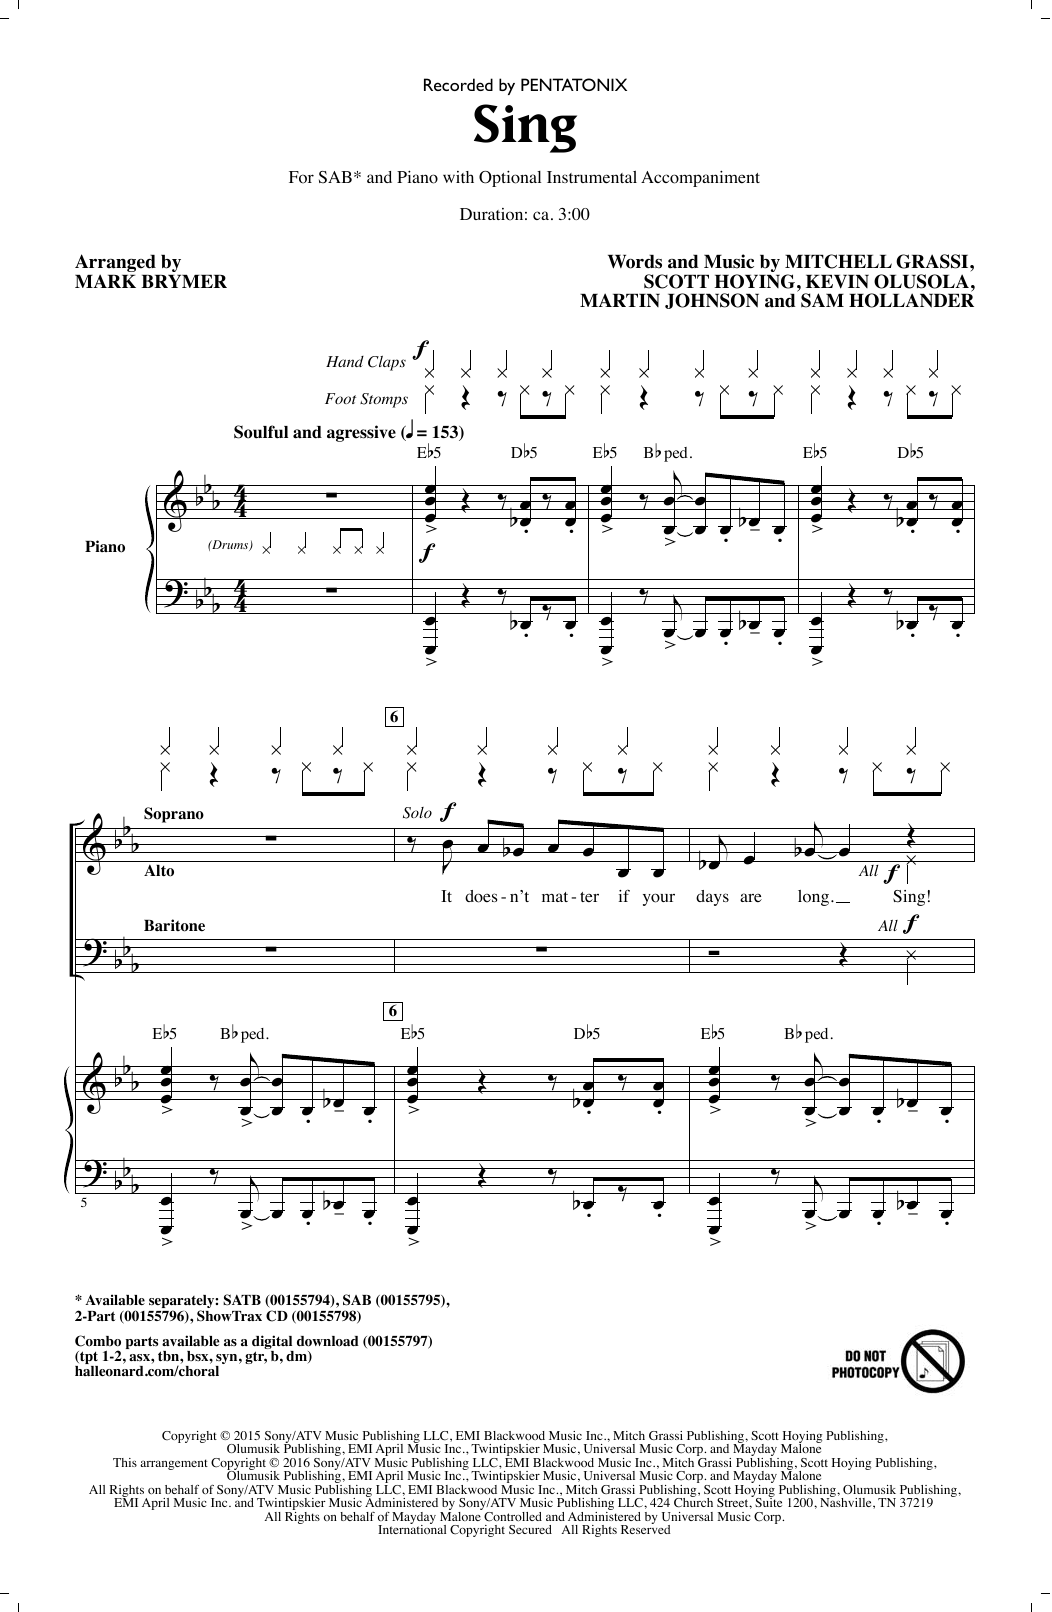 Pentatonix Sing (arr. Mark Brymer) Sheet Music Notes & Chords for SATB - Download or Print PDF